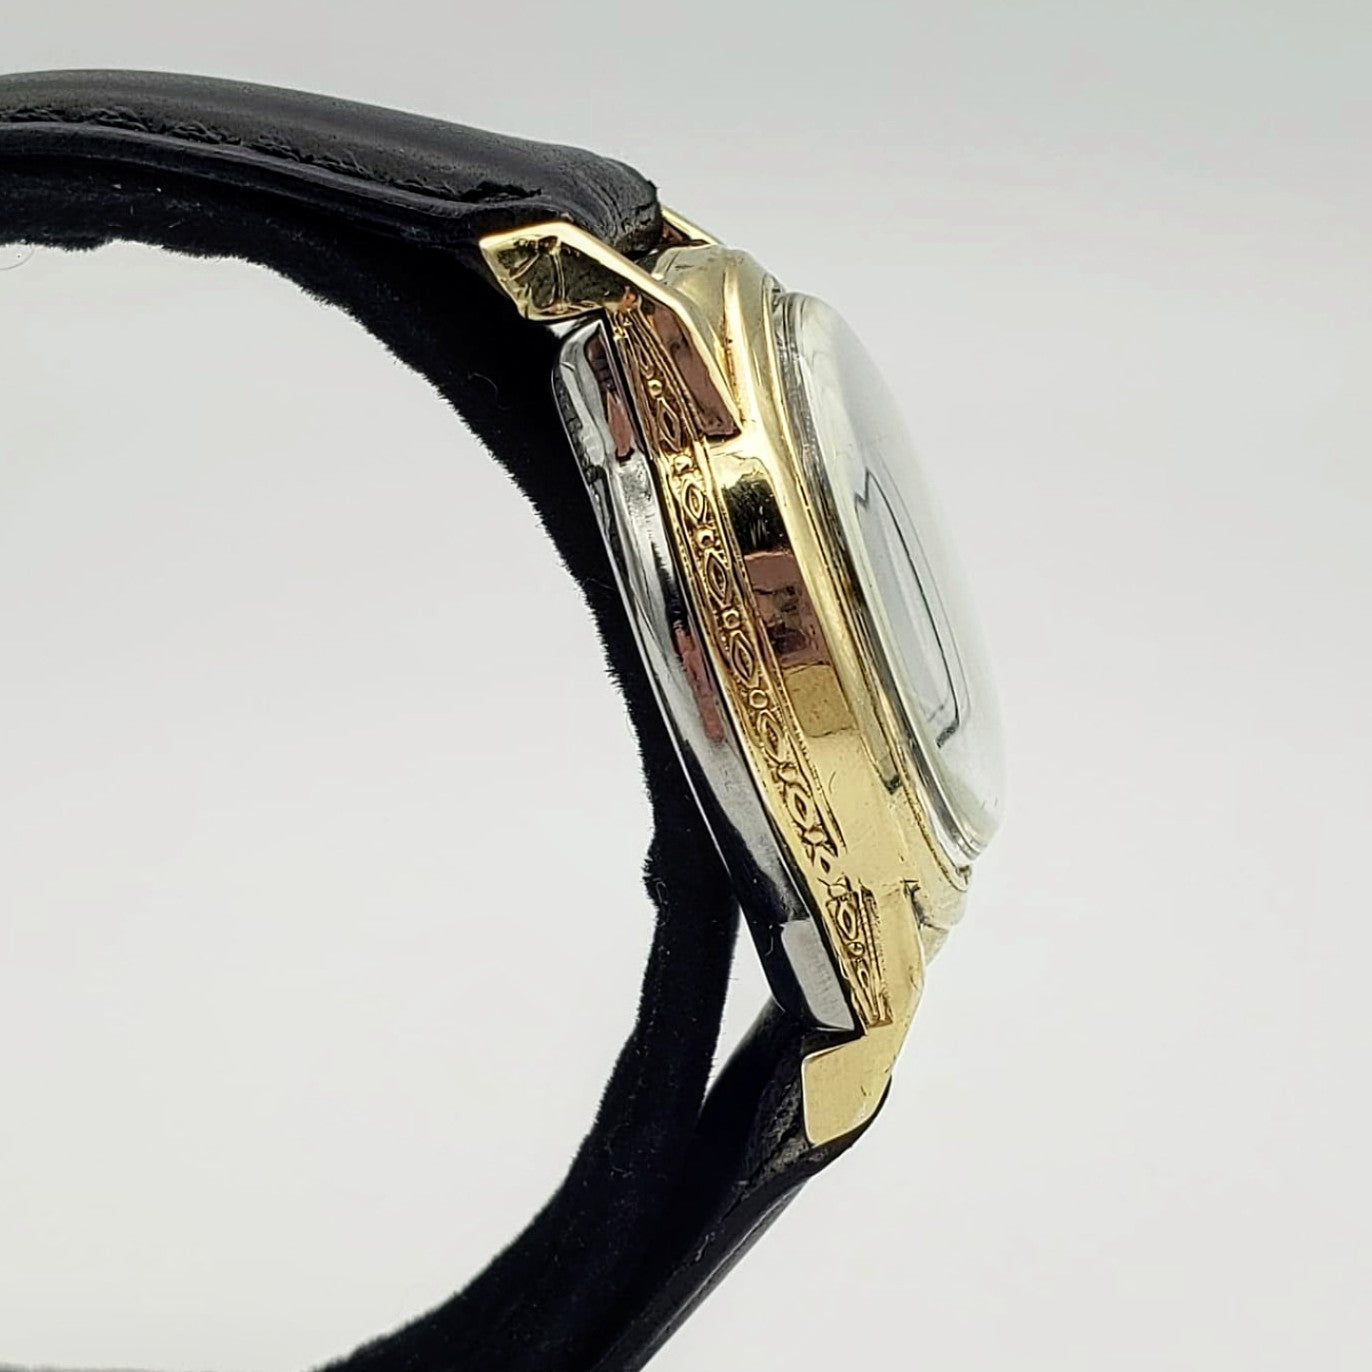 Vintage Oxford Military Style Wristwatch Sindaco Movement 15 Jewels Watch